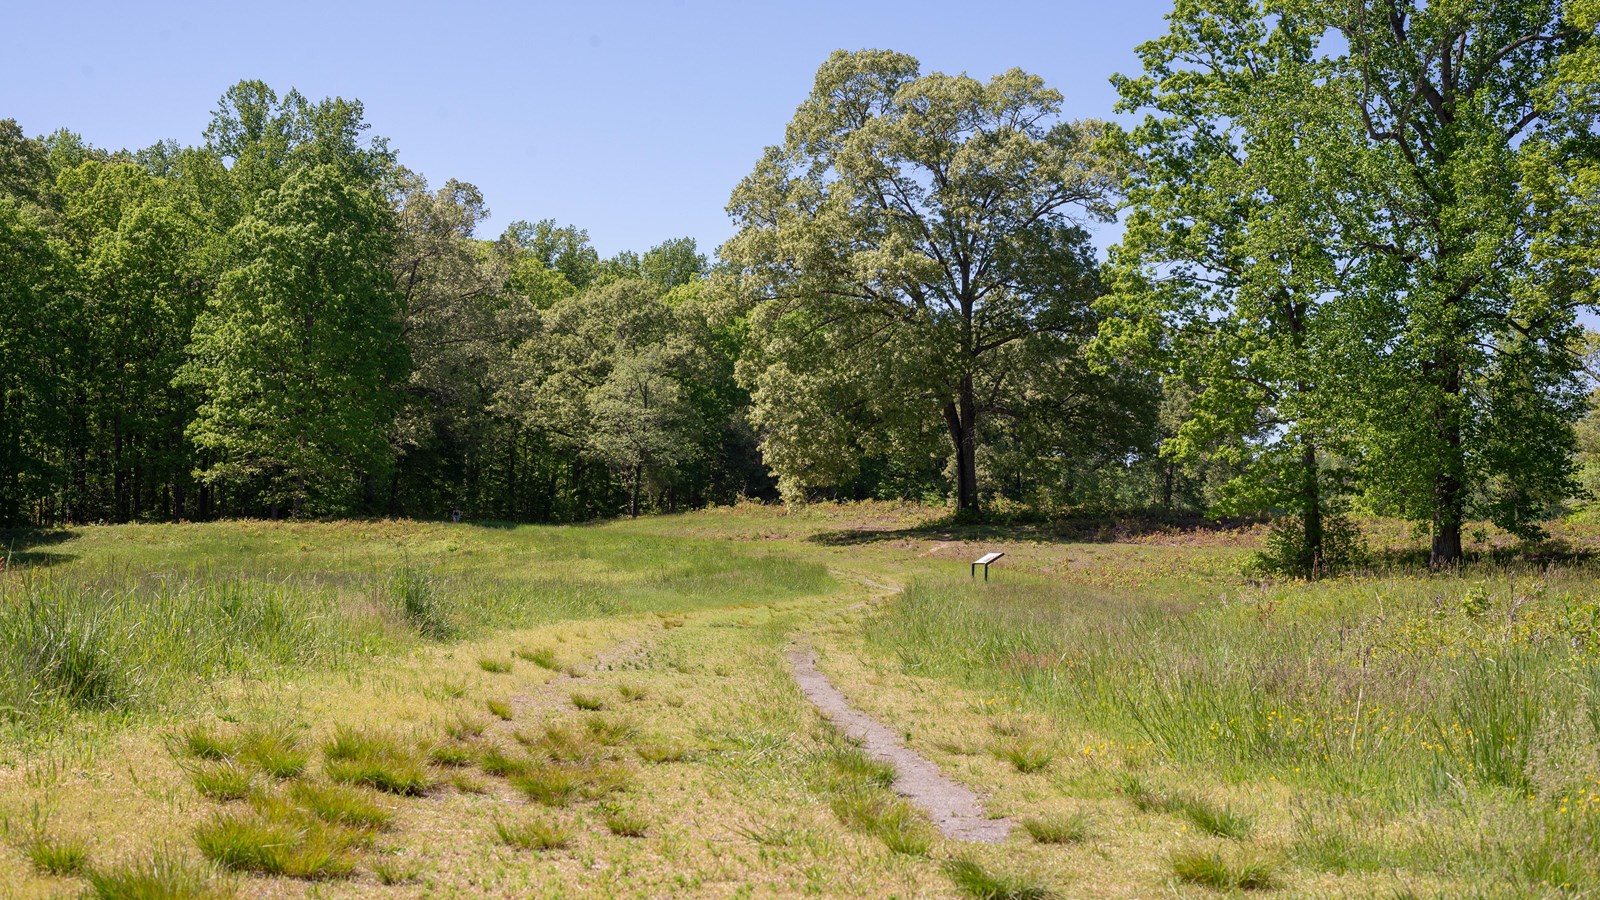 A grassy trail follows along a tree lined field.